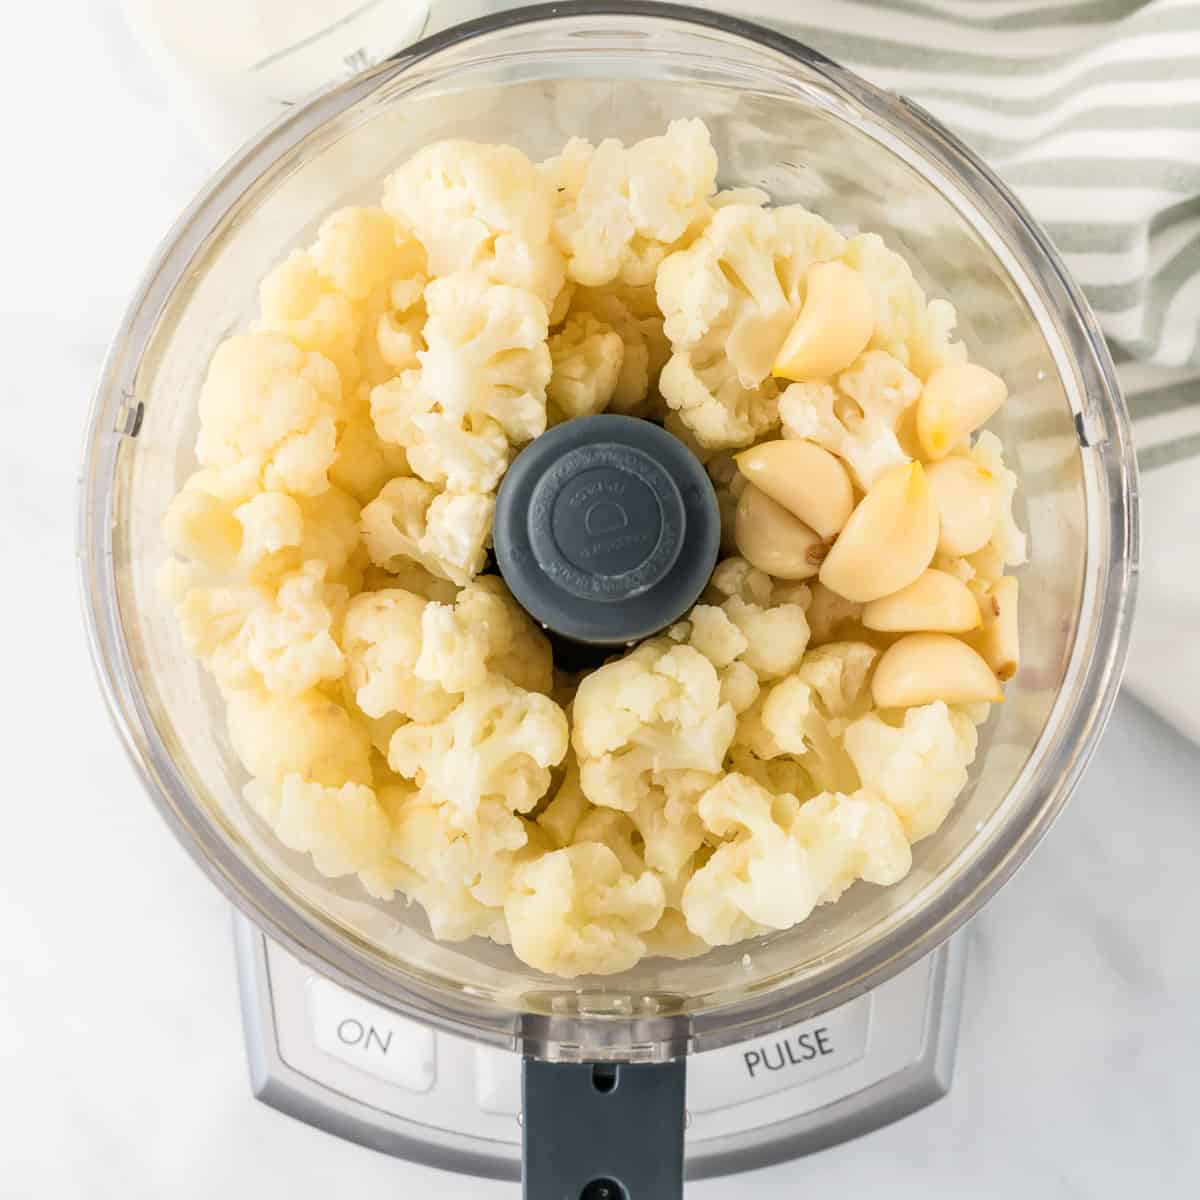 steamed cauliflower and garlic in a food processor